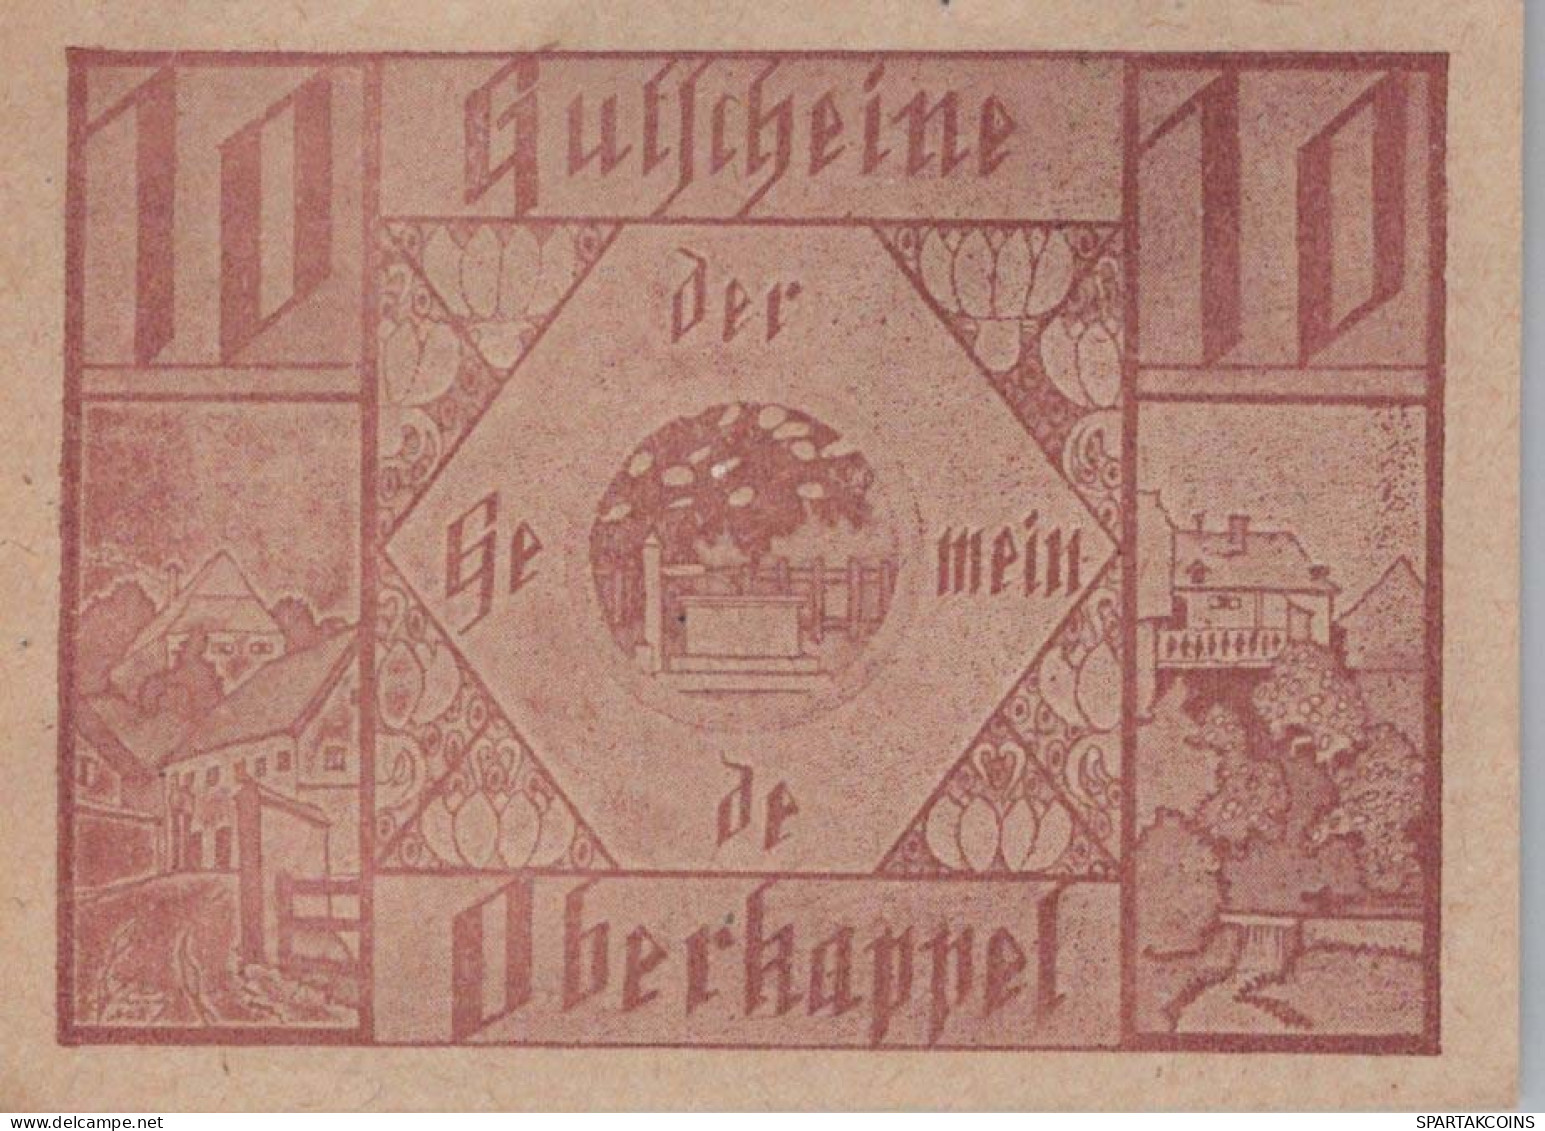 10 HELLER 1920 Stadt OBERKAPPEL Oberösterreich Österreich Notgeld #PE500 - [11] Lokale Uitgaven